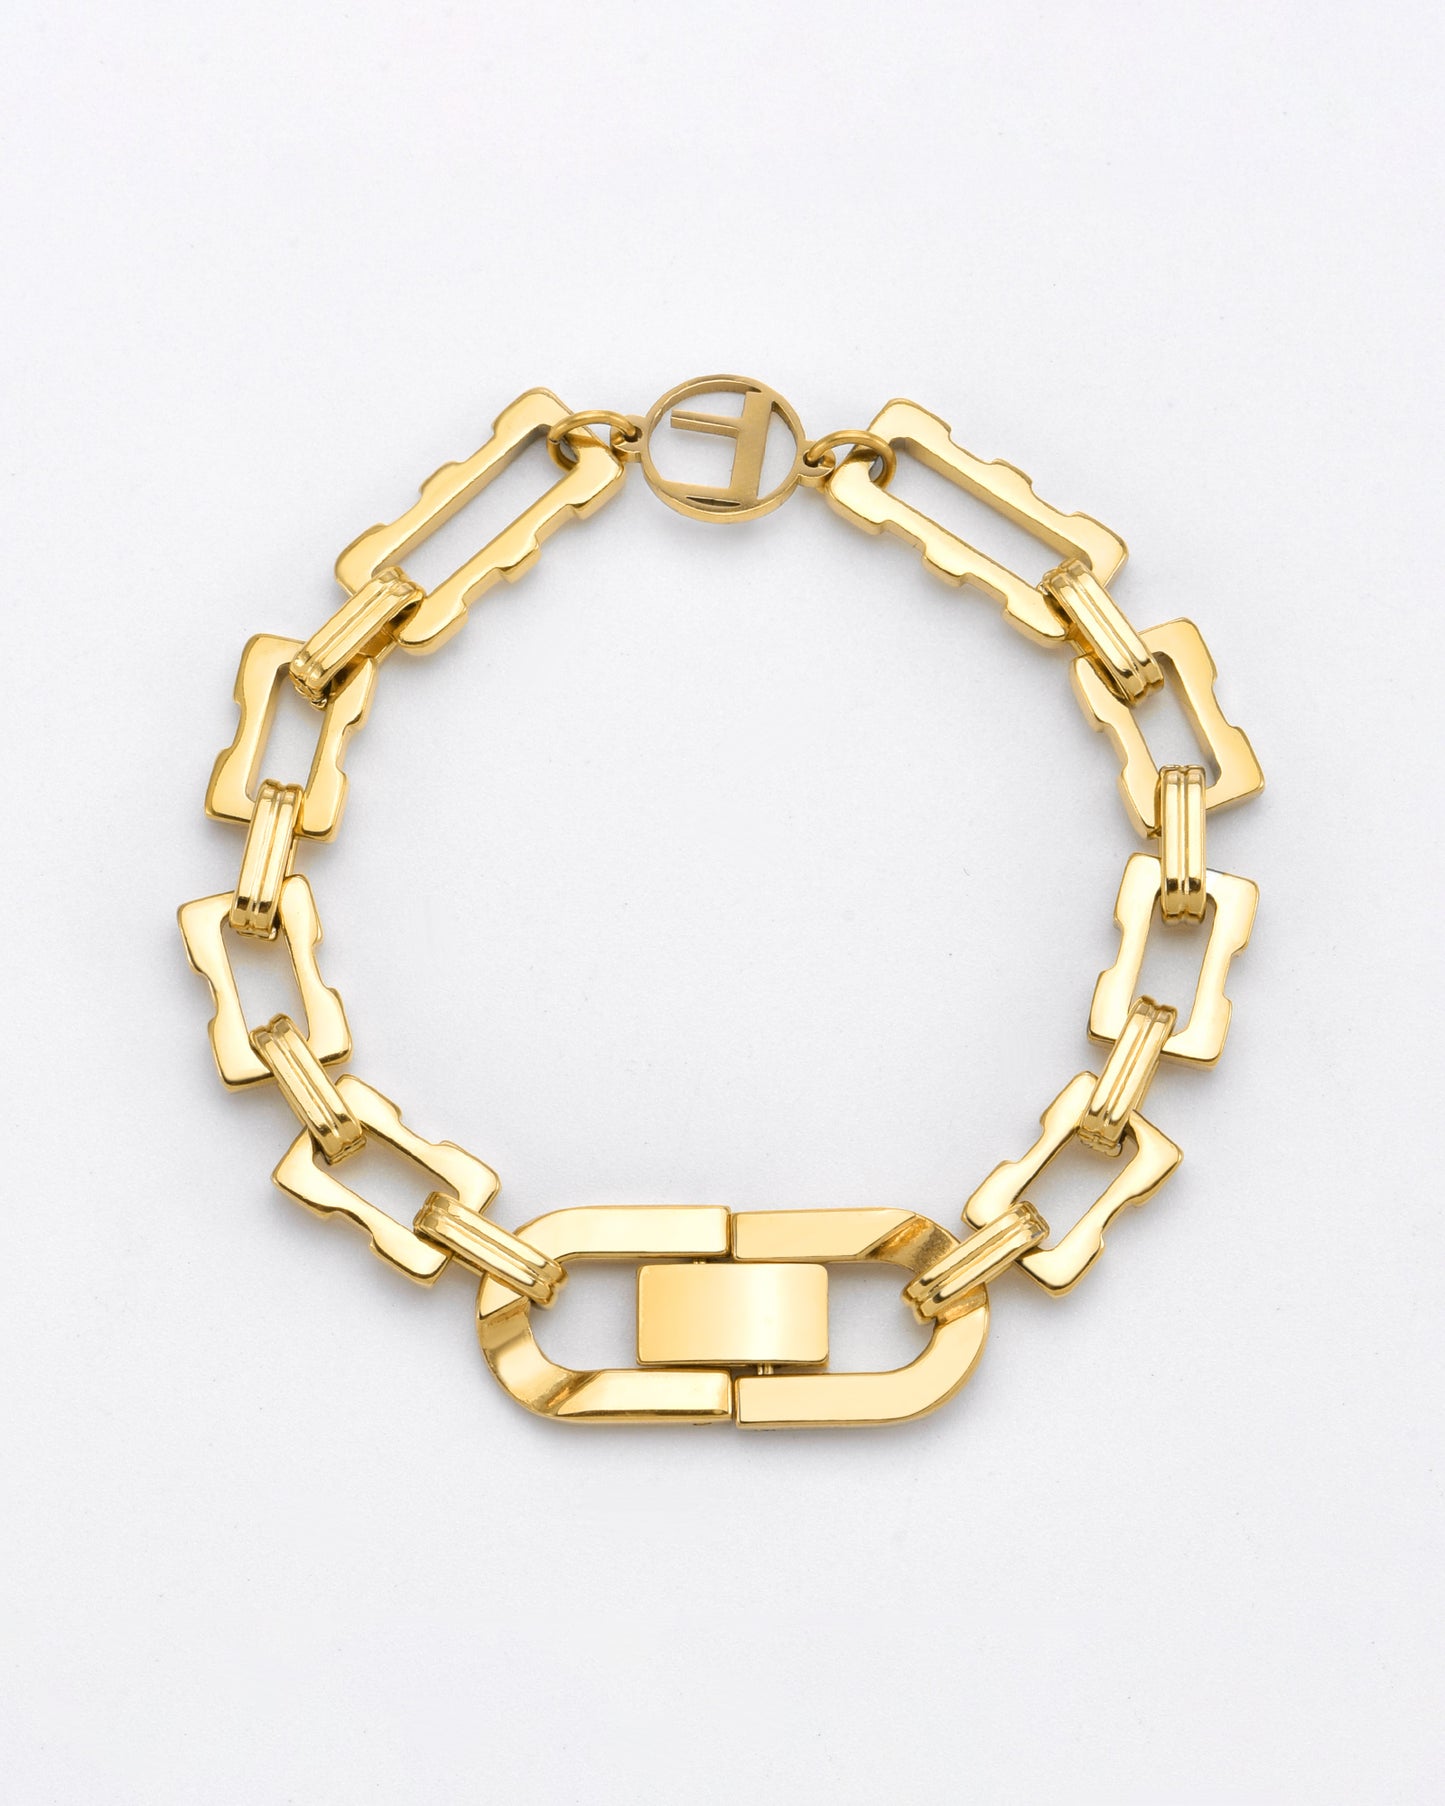 Links Bracelet Gold